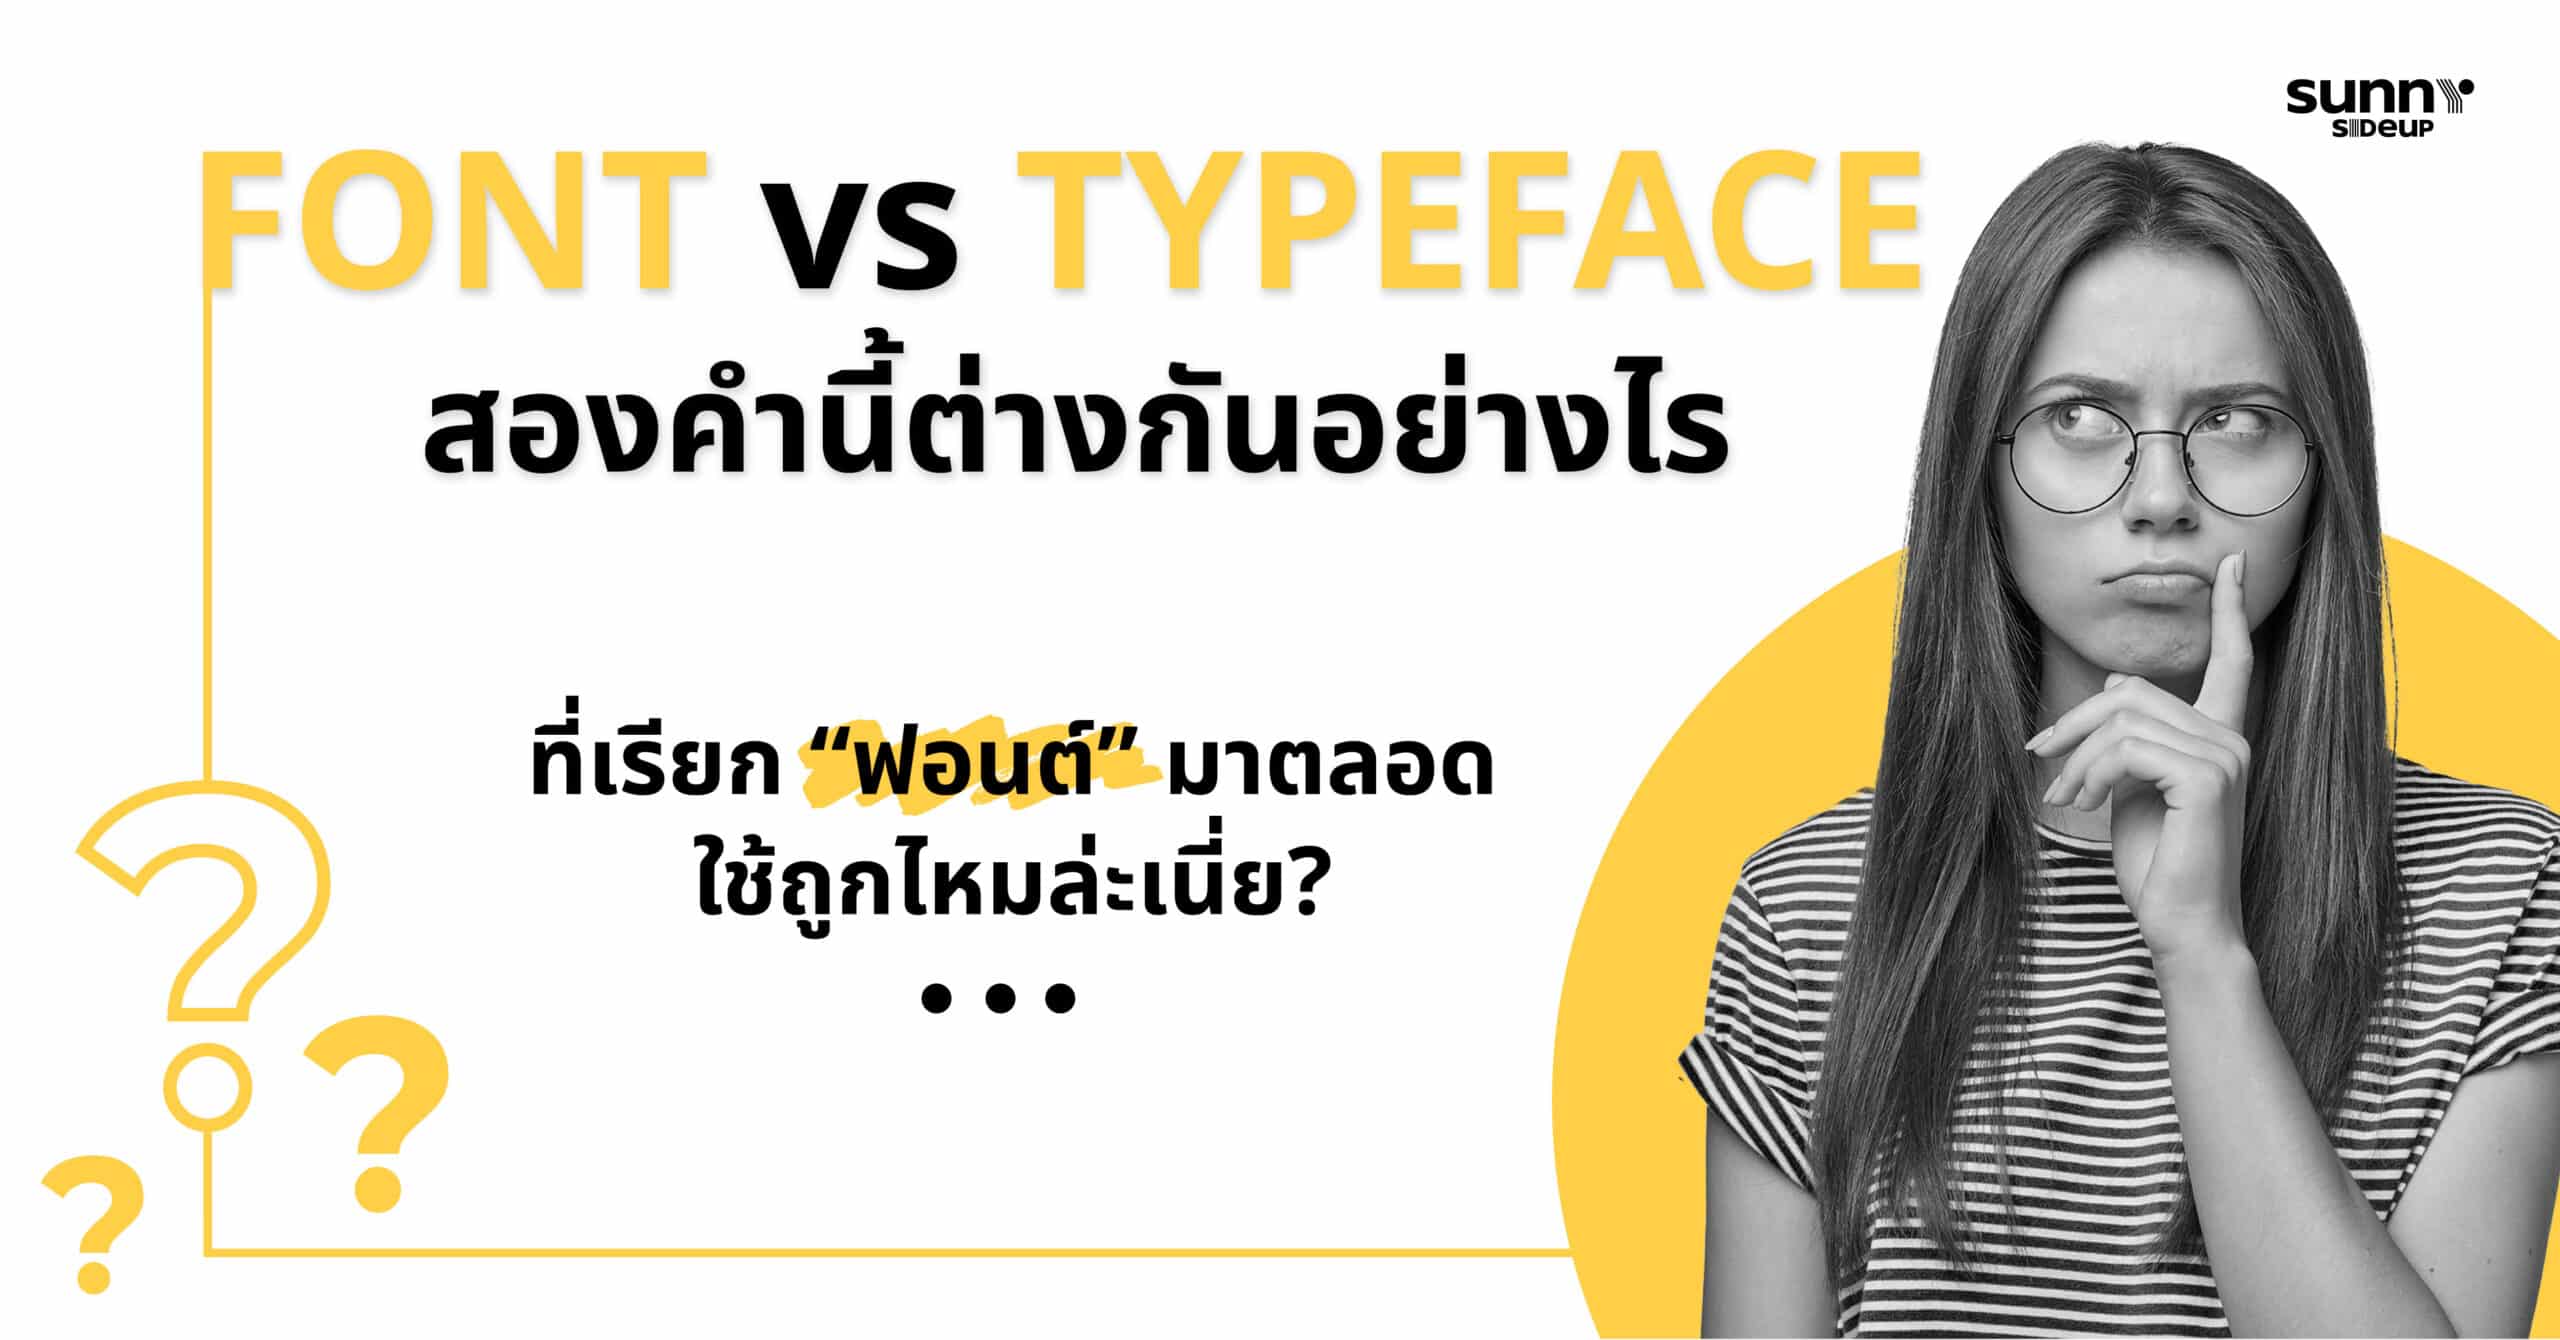 Font และ Typeface ต่างกันอย่างไร